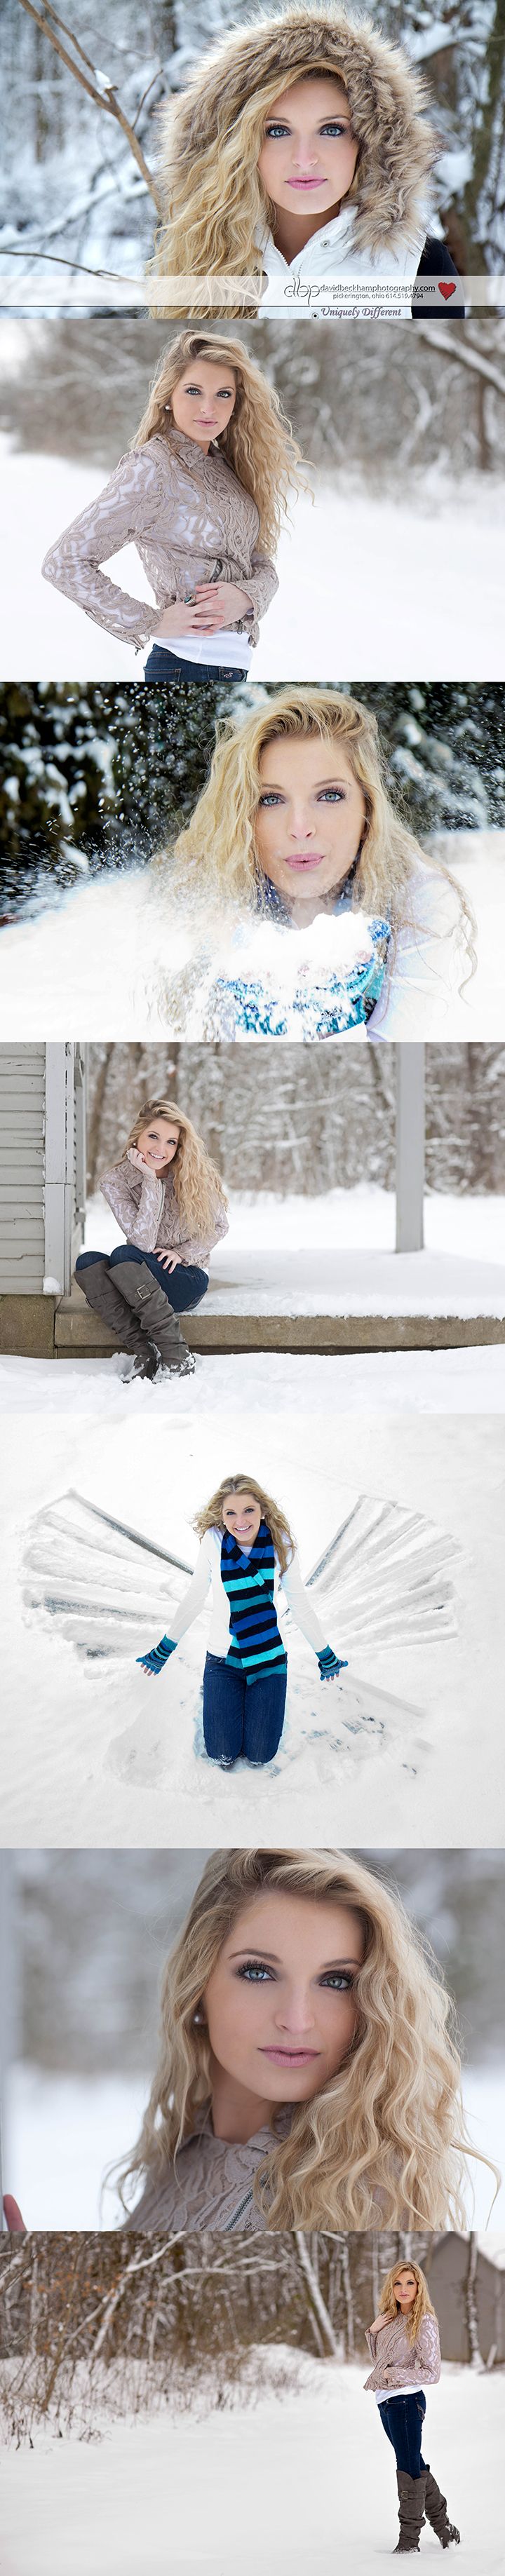 418 best winter images on Pinterest | Senior photos, Senior pictures ...